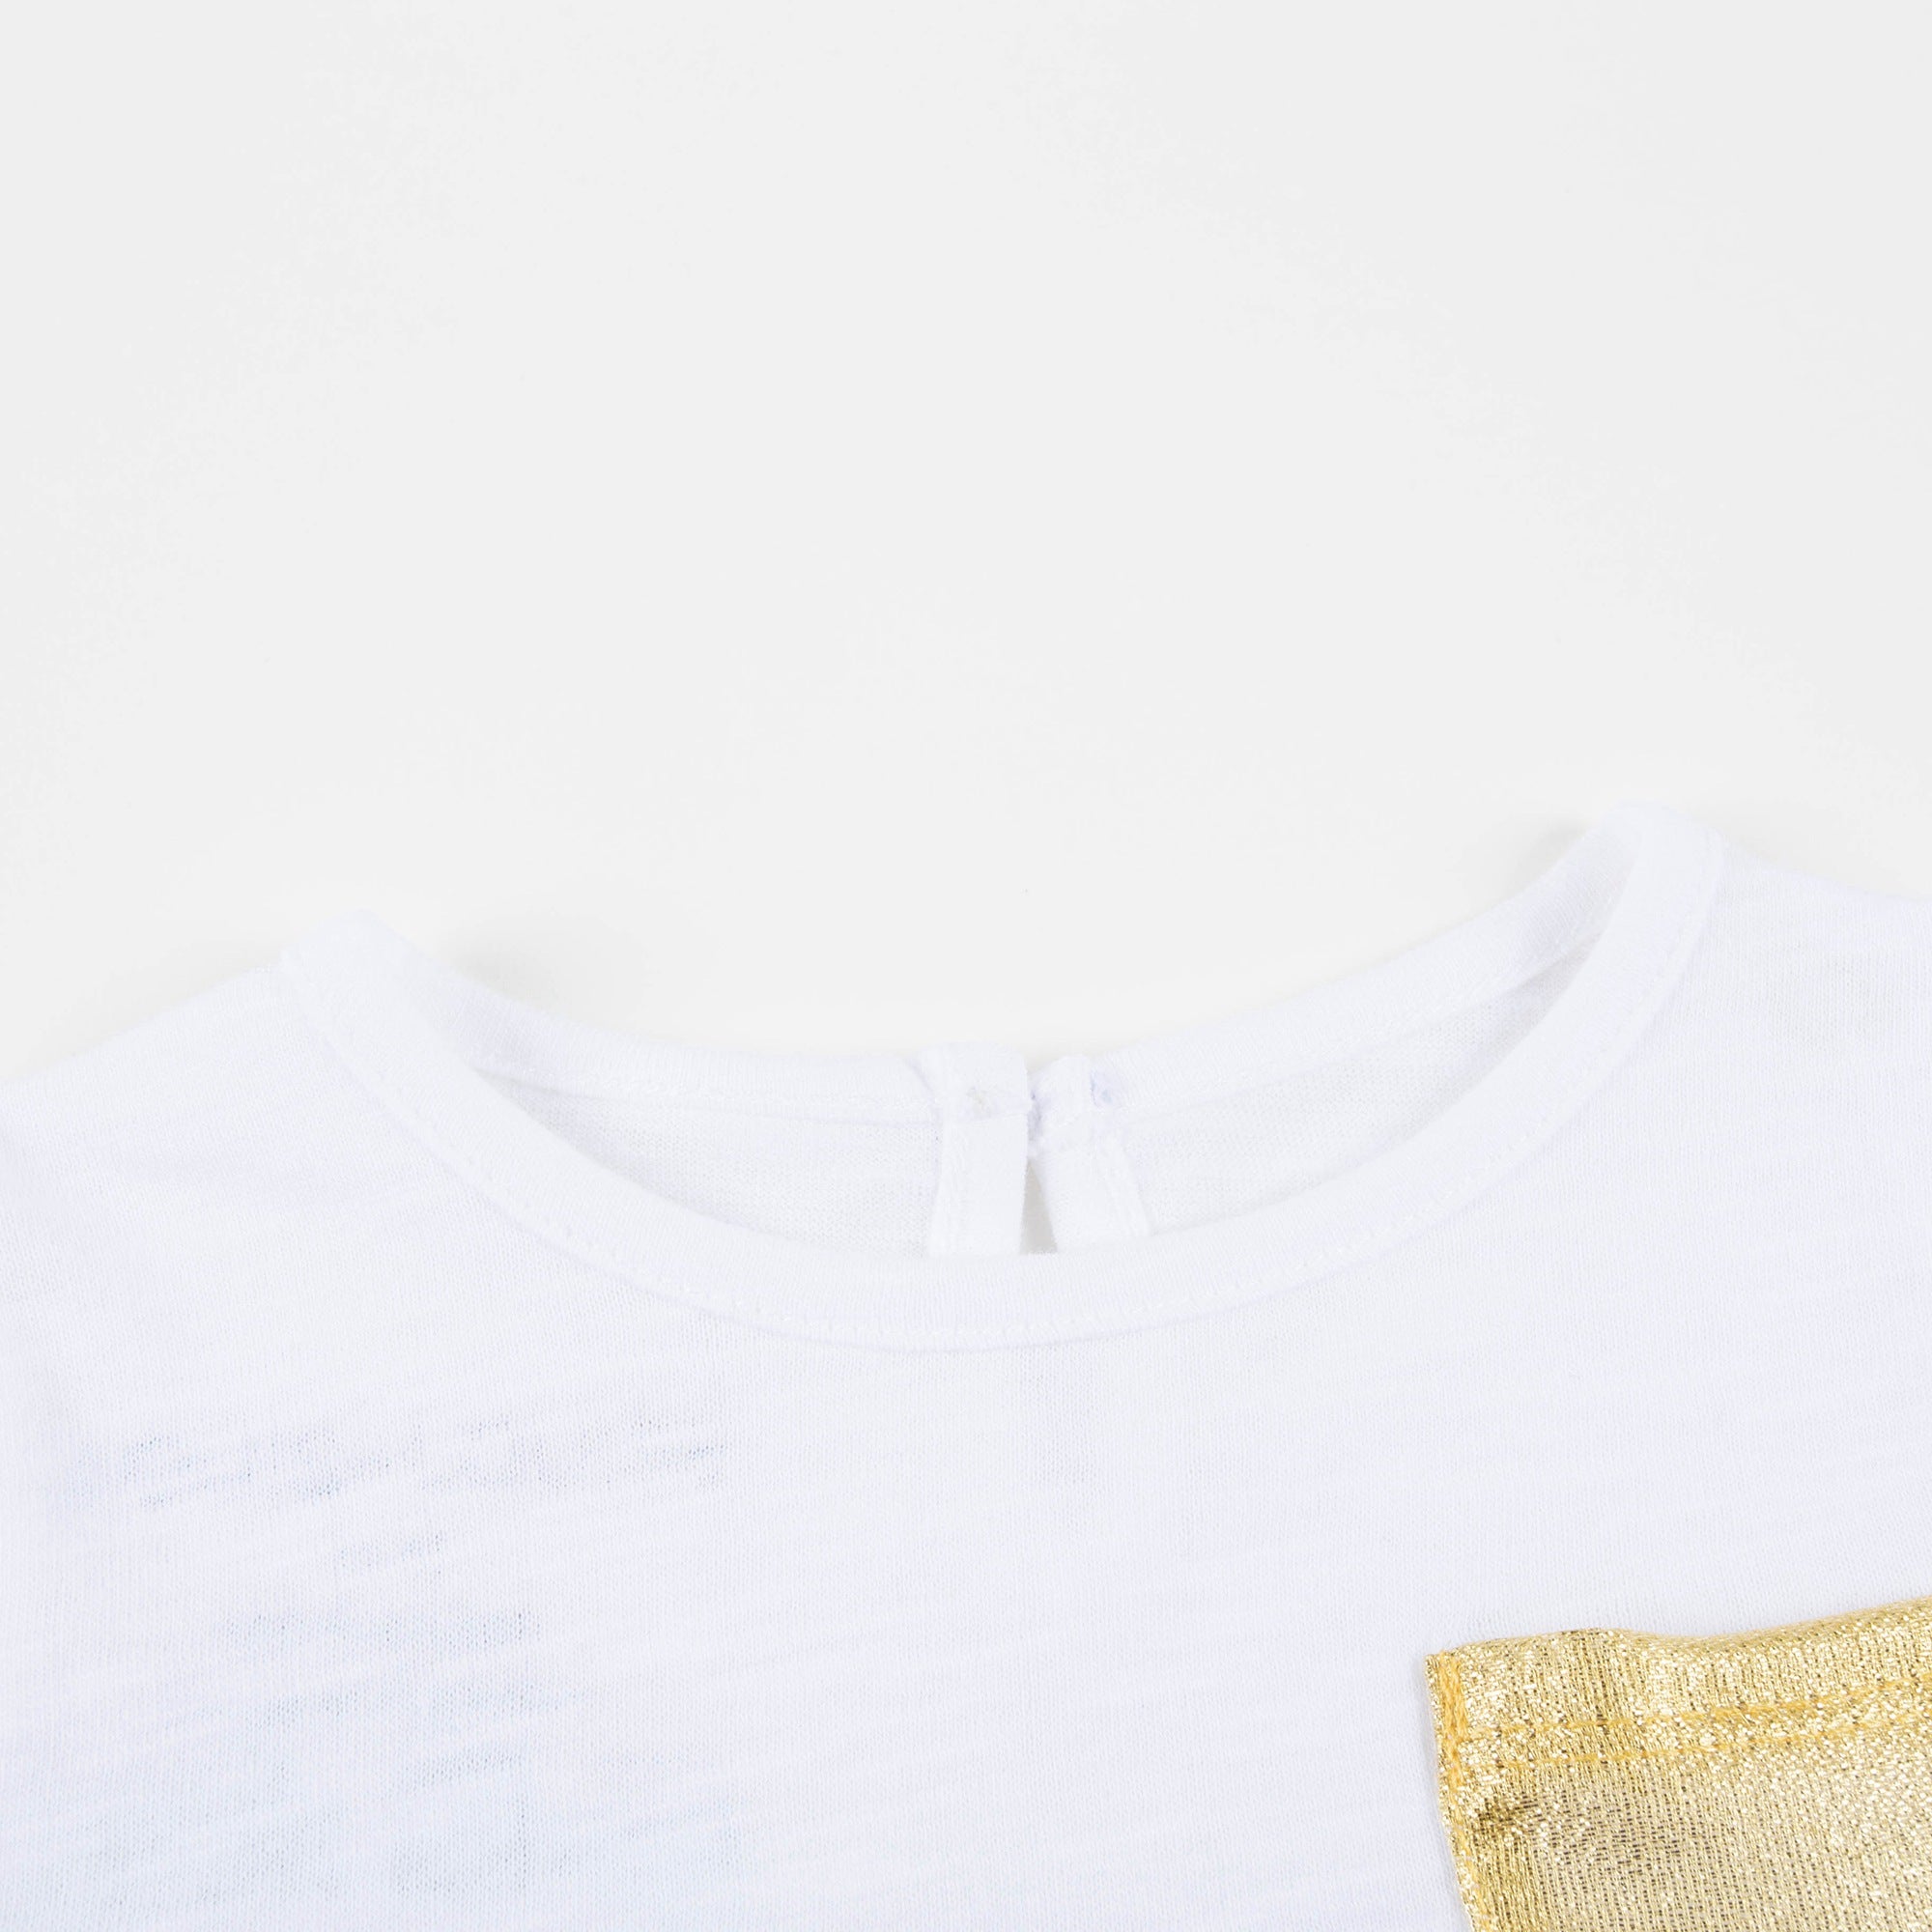 Baby White "Jersey" Cotton T-shirt